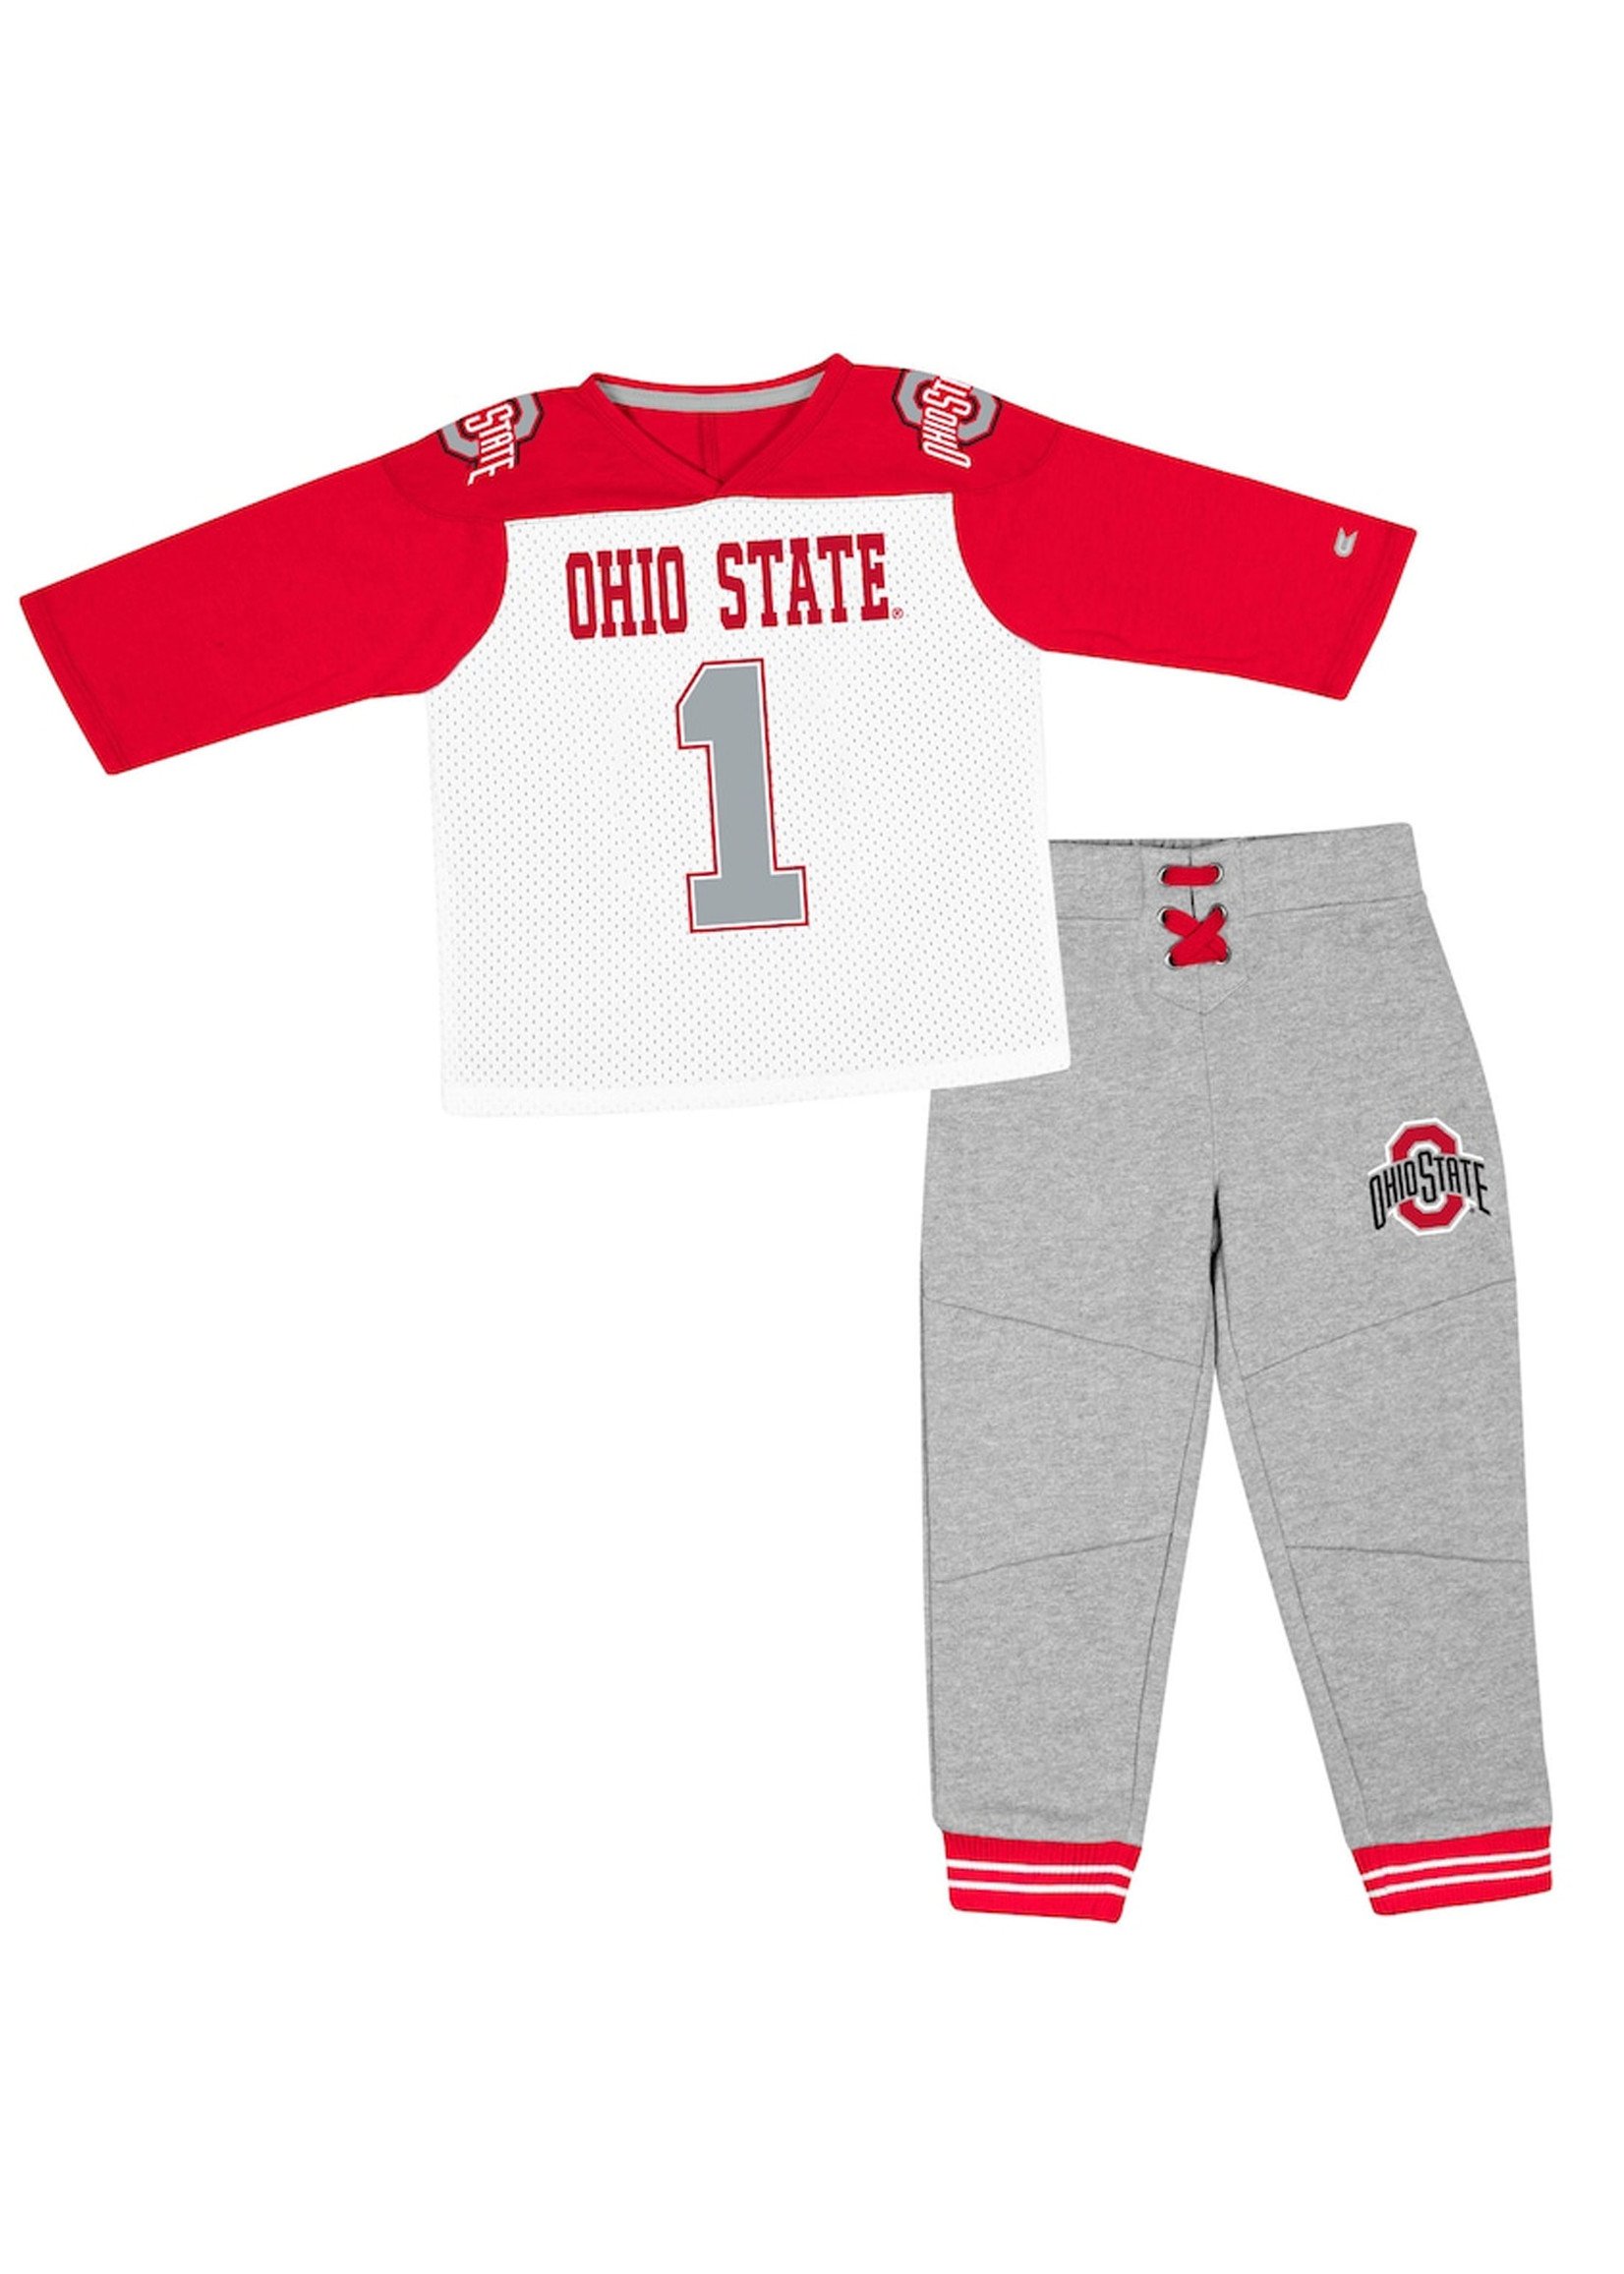 Colosseum Athletics Ohio State Buckeyes Toddler Football Jersey T-Shirt & Pants Set